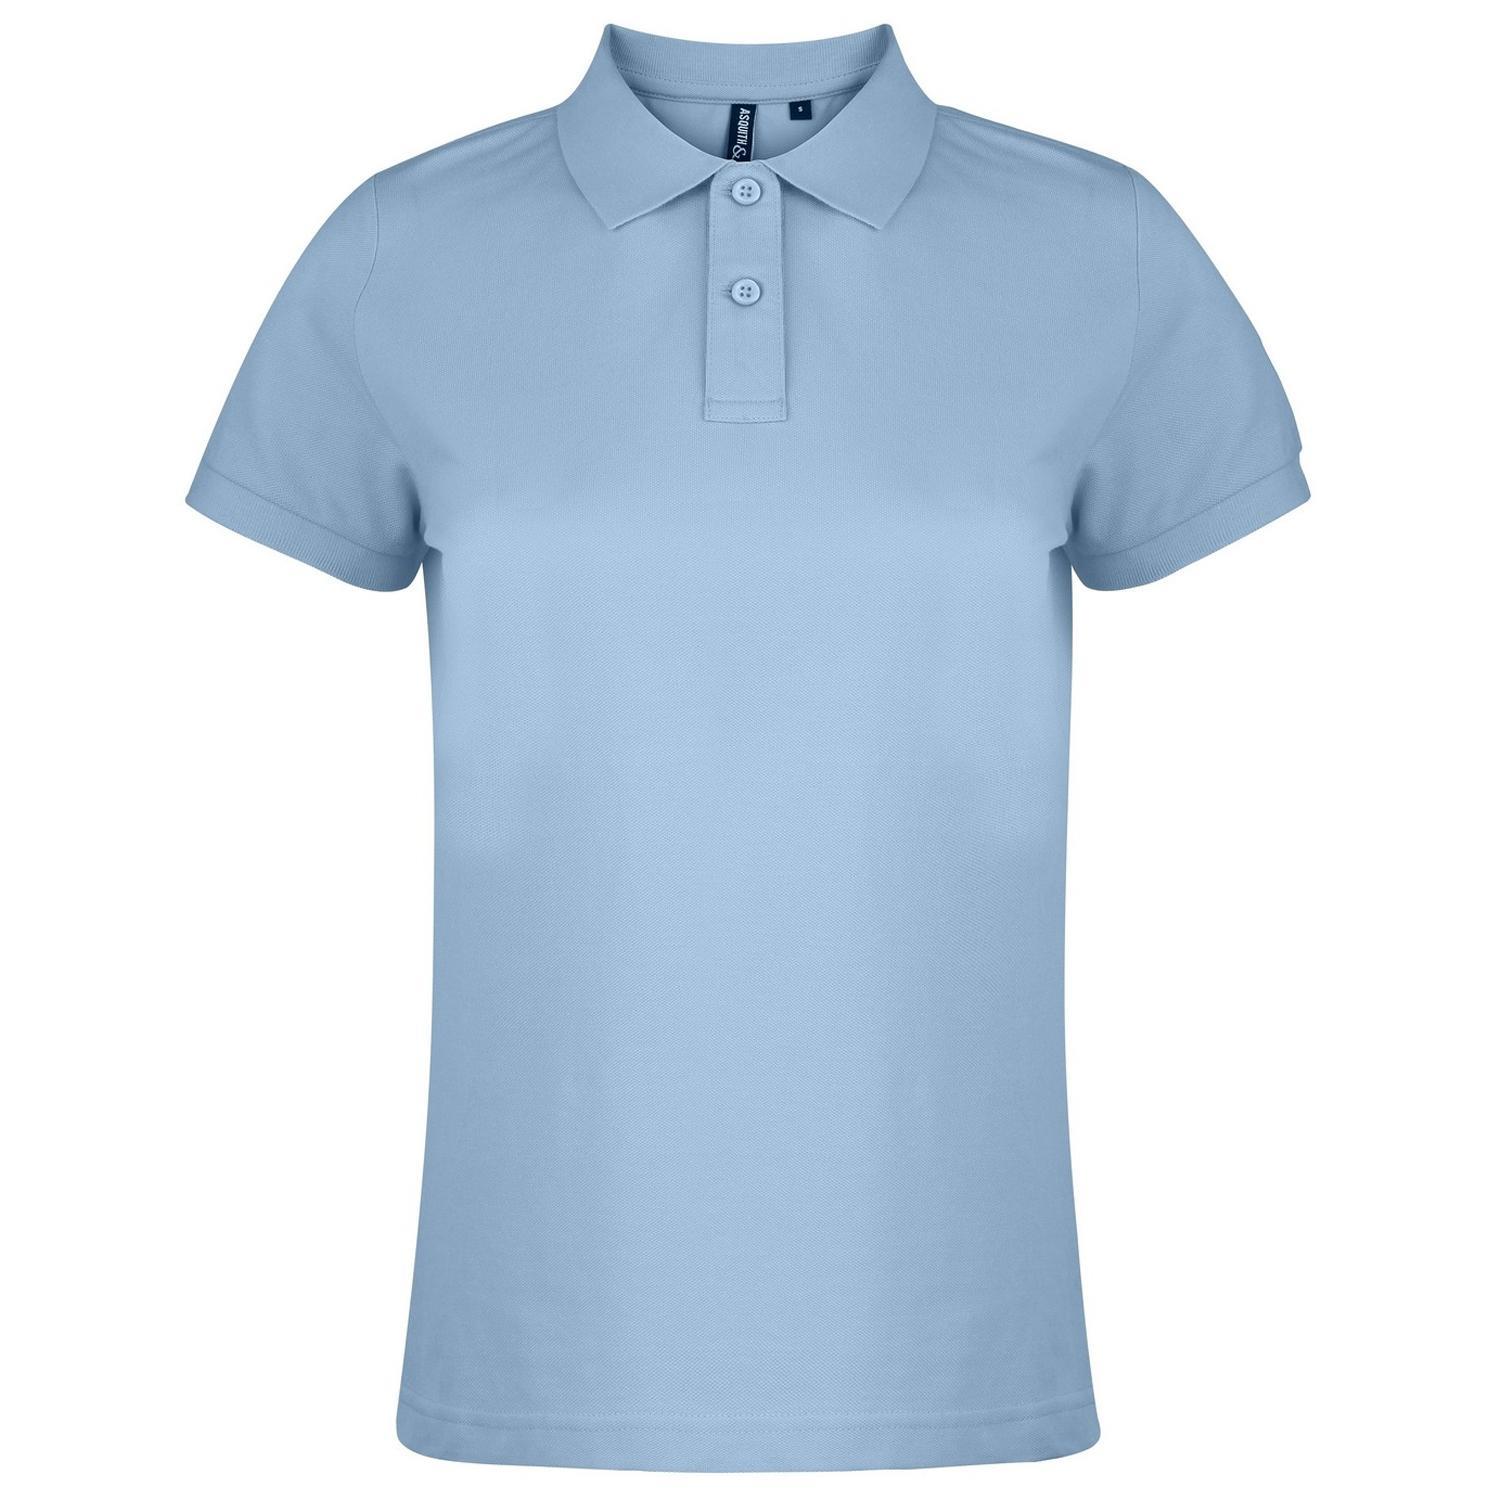 Asquith & Fox Womens/Ladies Plain Short Sleeve Polo Shirt (Sky) (S)